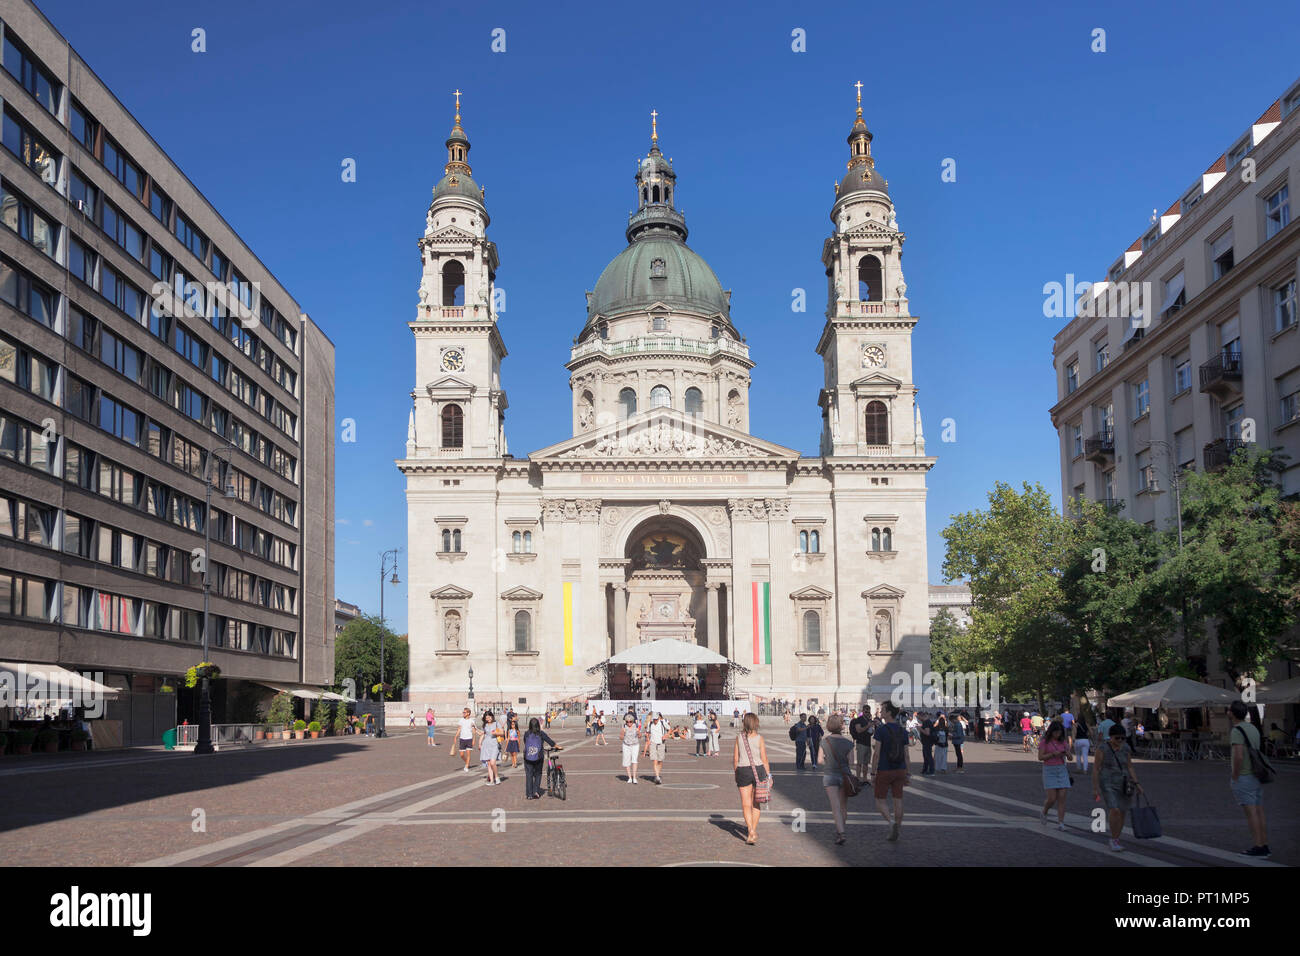 St. Stephen's Basilica at Szent Istvan Square, Pest, Budapest, Hungary Stock Photo